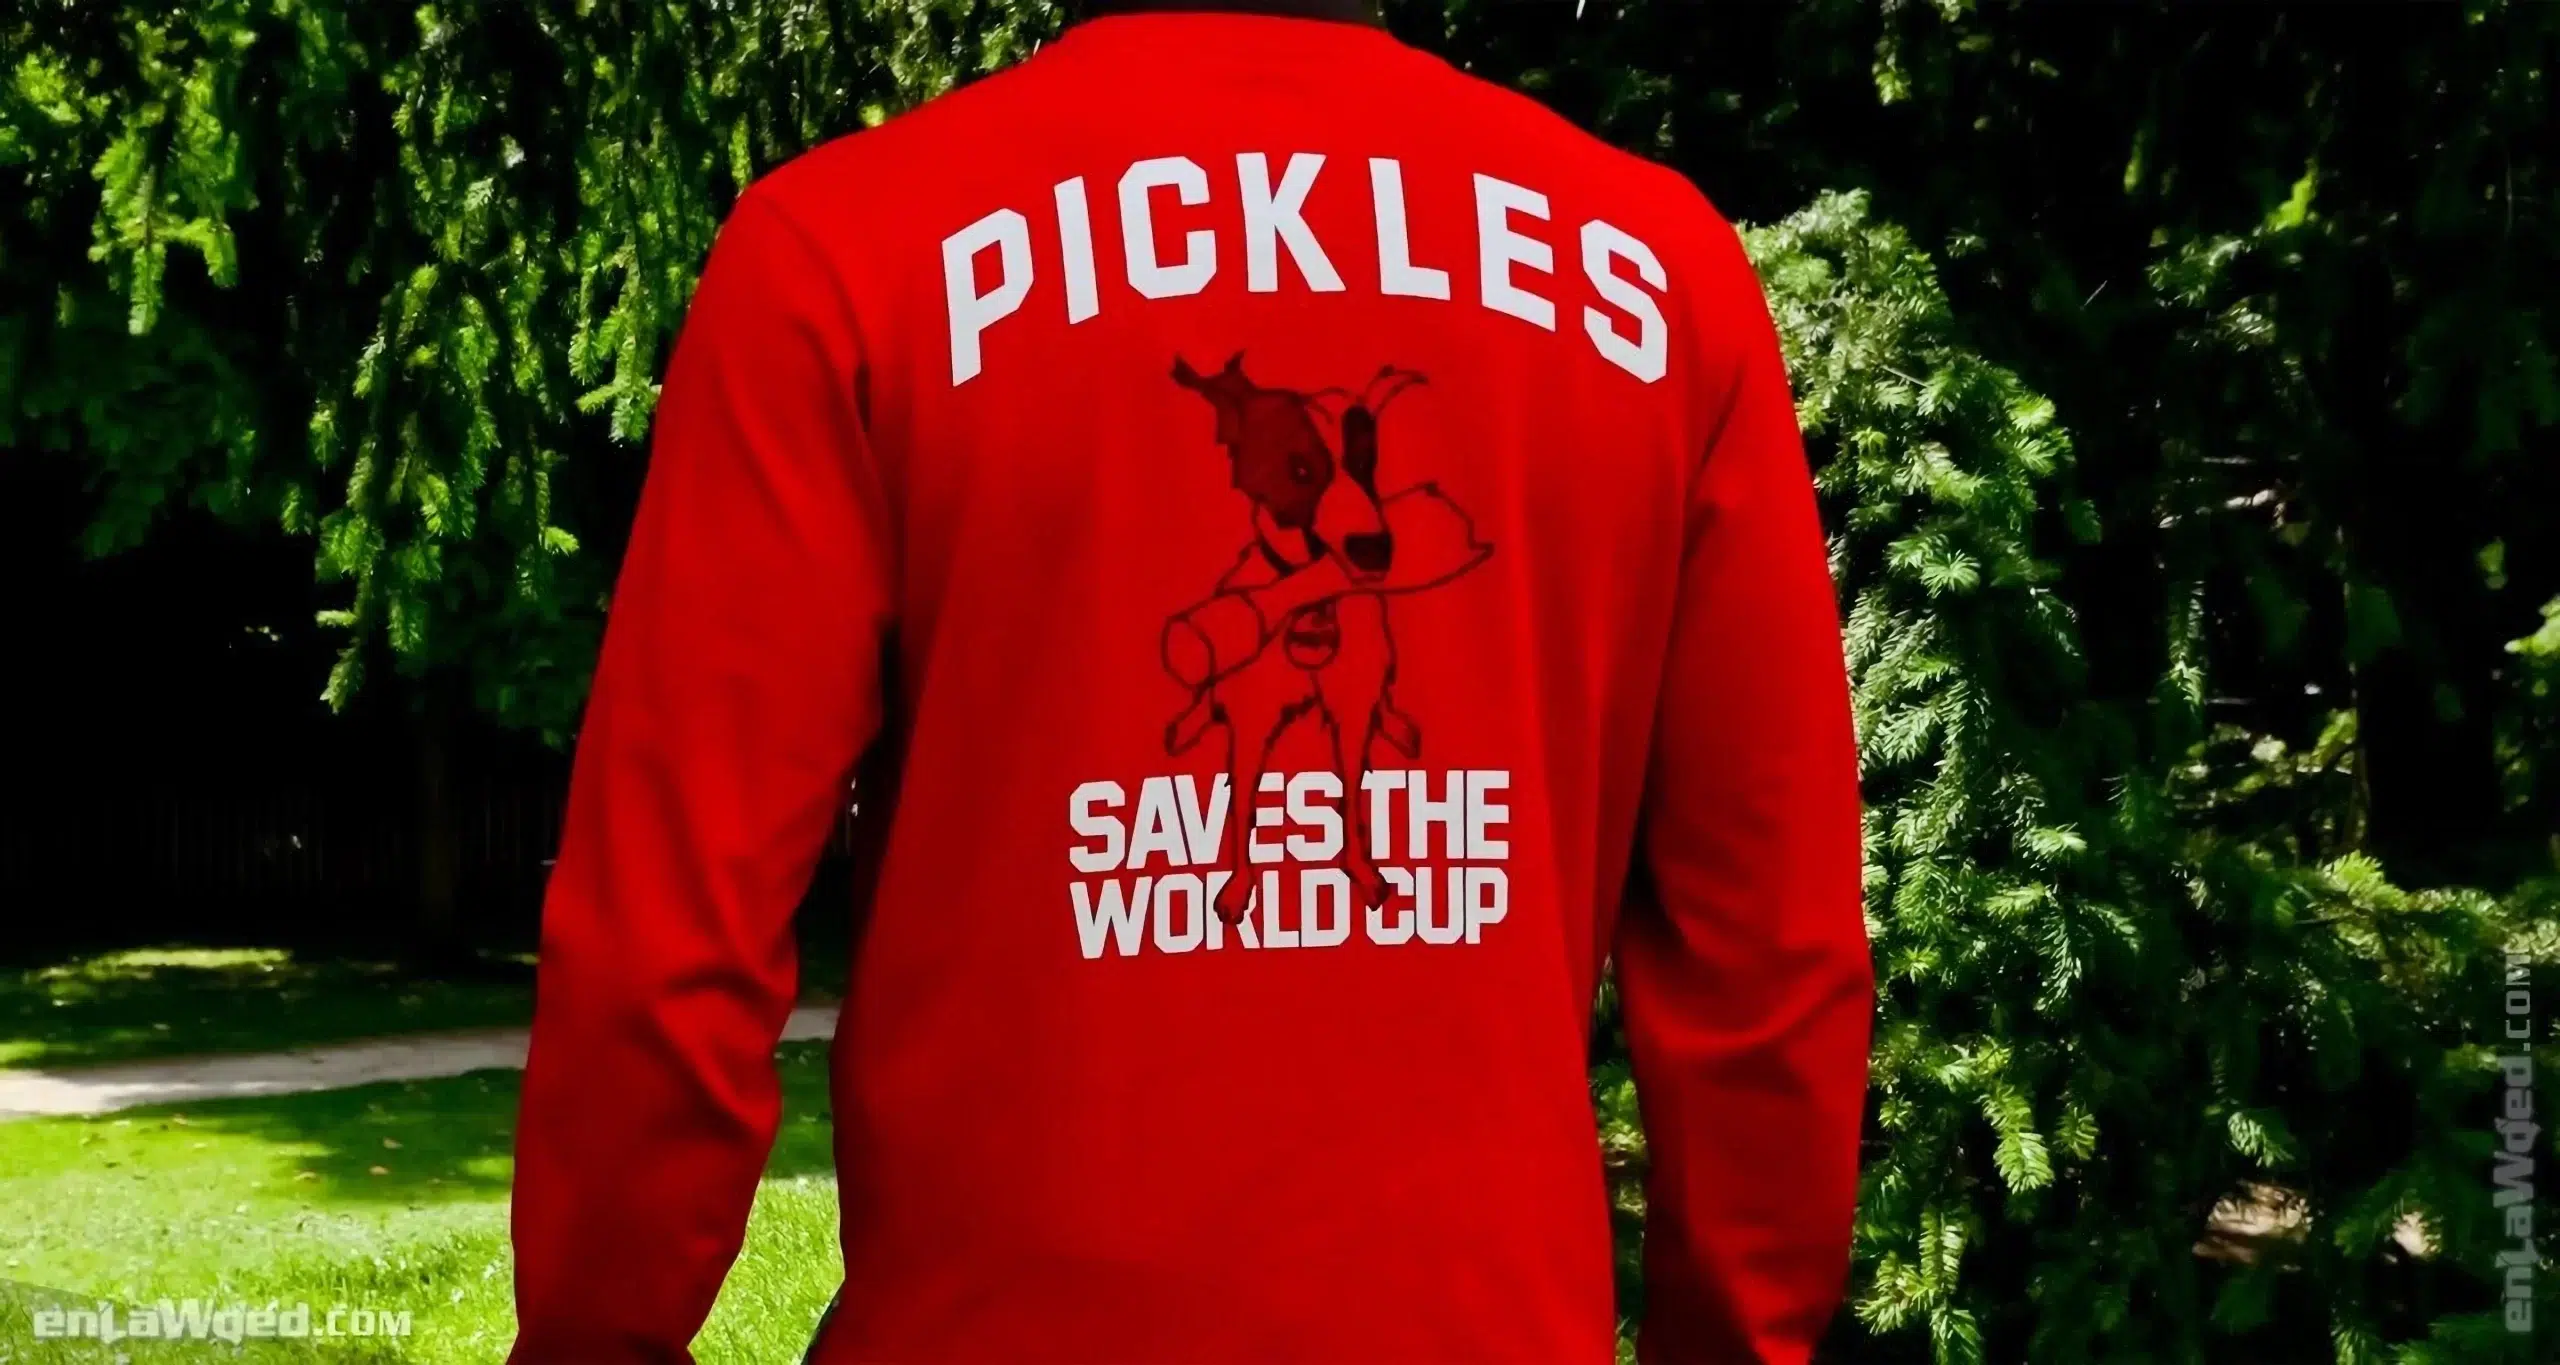 Men’s 2006 England ’66 Pickles LS by Adidas Originals: Blissful (EnLawded.com file #lmchk90273ip2y122165kg9st)